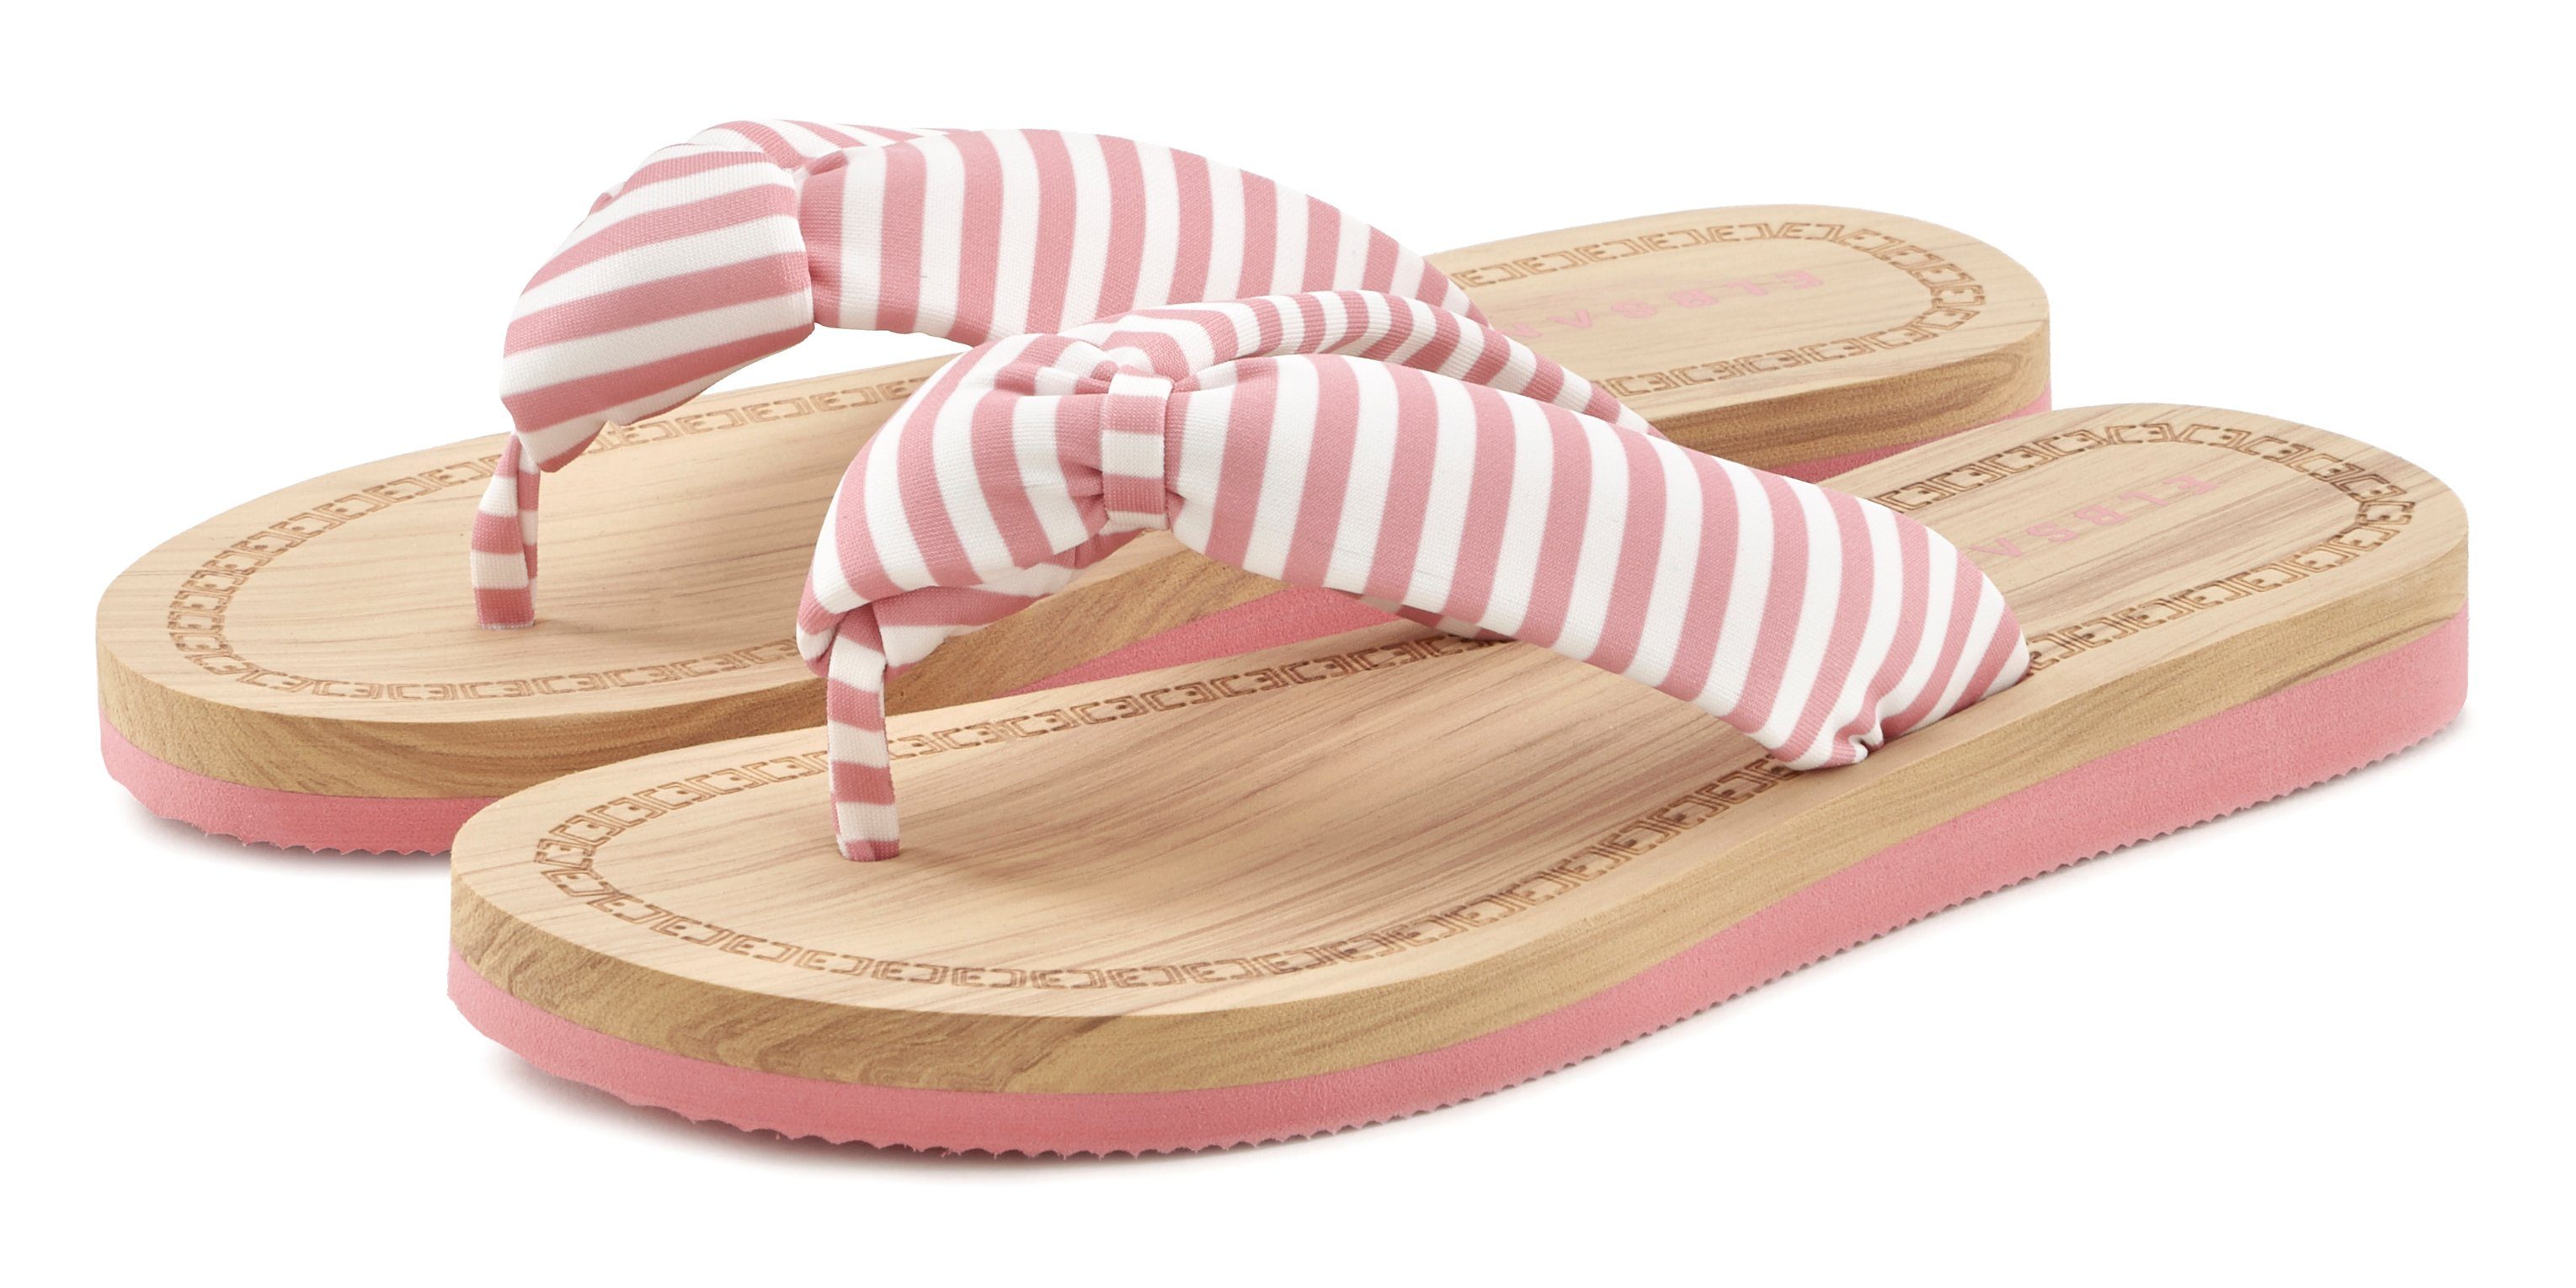 Elbsand Badezehentrenner Sandale, Pantolette, Badeschuh ultraleicht VEGAN rosa-gestreift